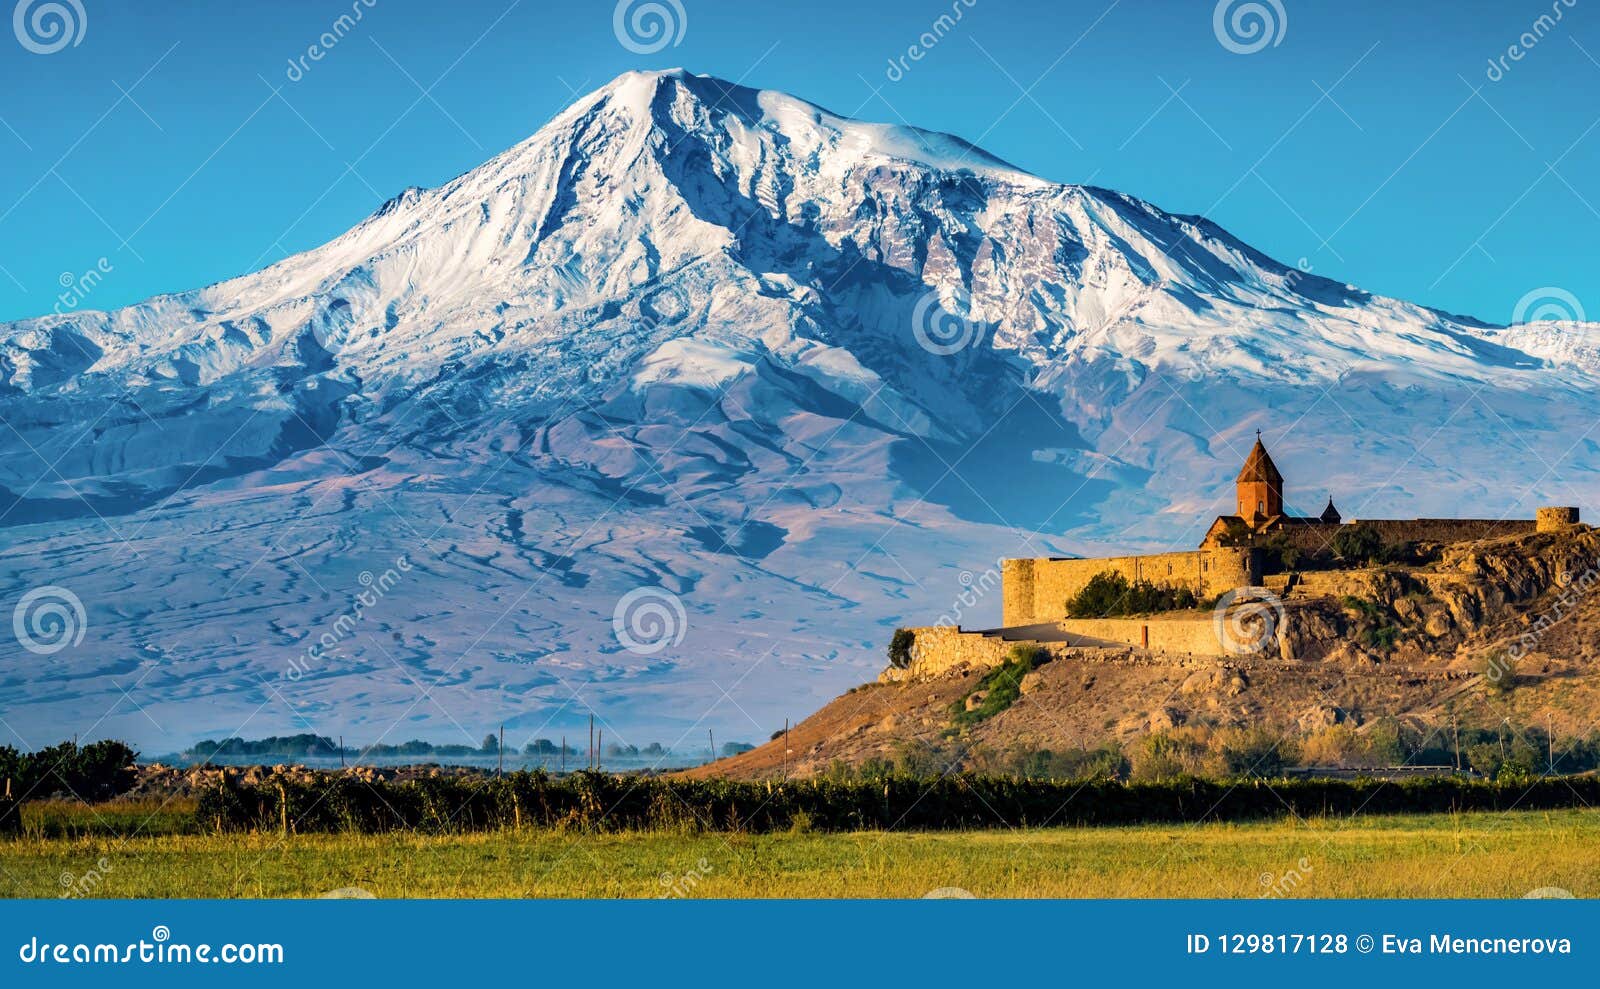 khor virap monastery and mt. ararat, armenia